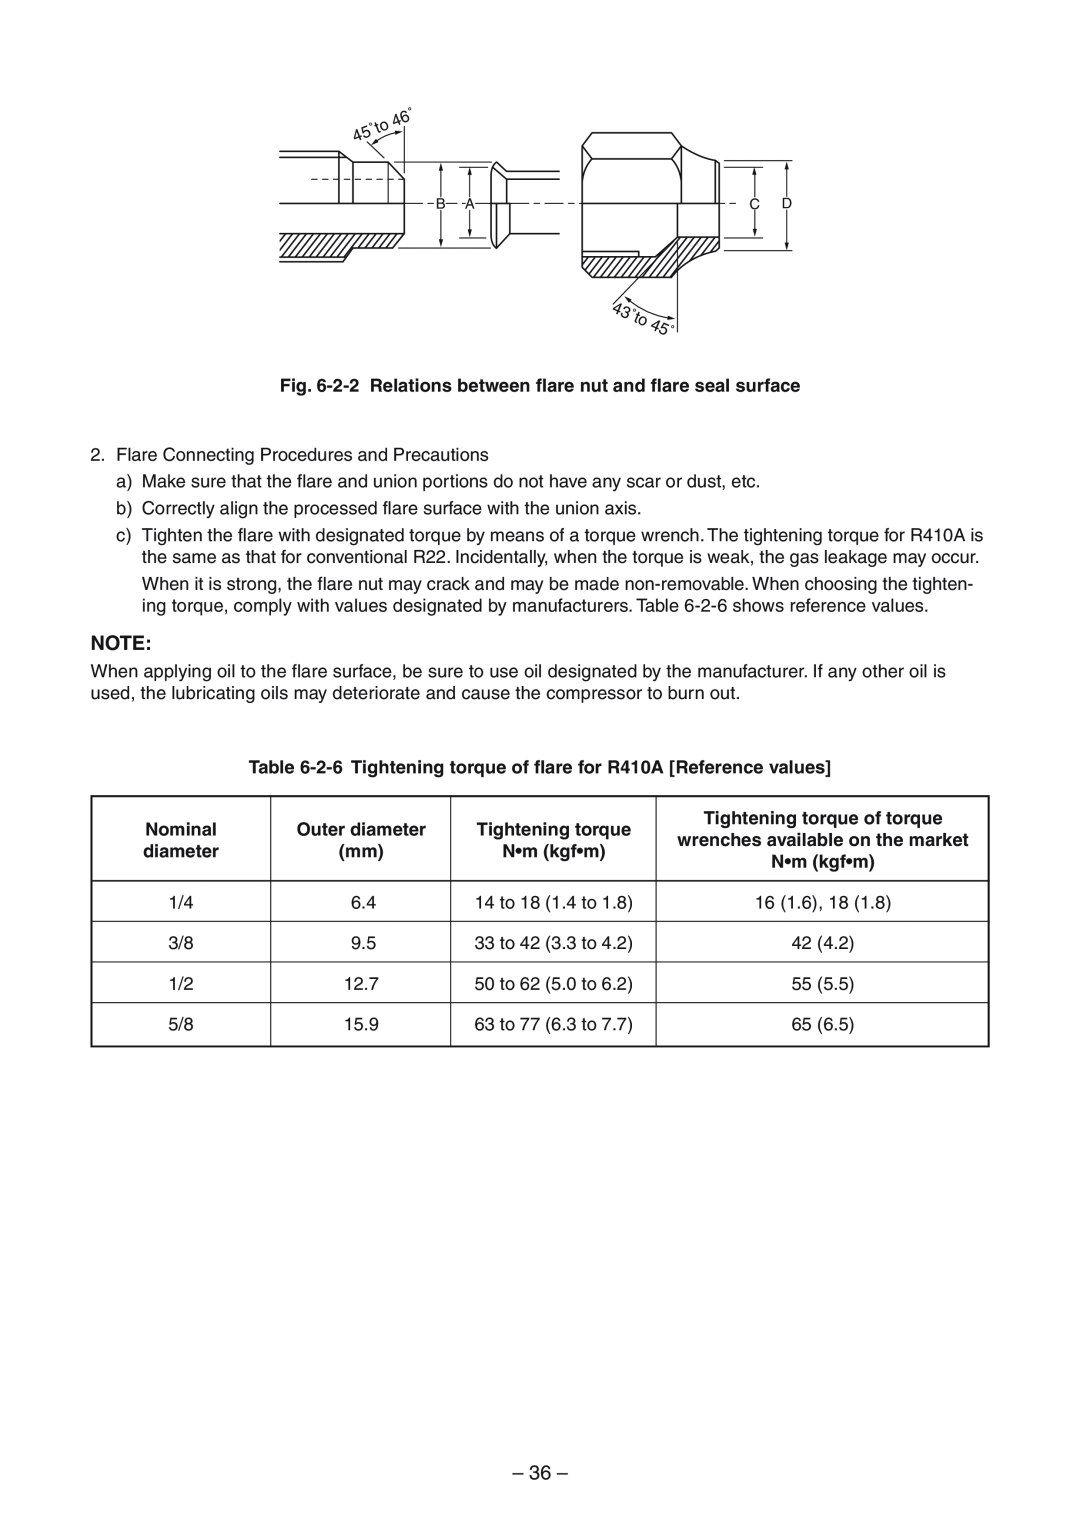 Toshiba RAV-SM1404UT-E, RAV-SM1104UT-E 36, Nominal, Outer diameter, Tightening torque of torque, N•m kgf•m 